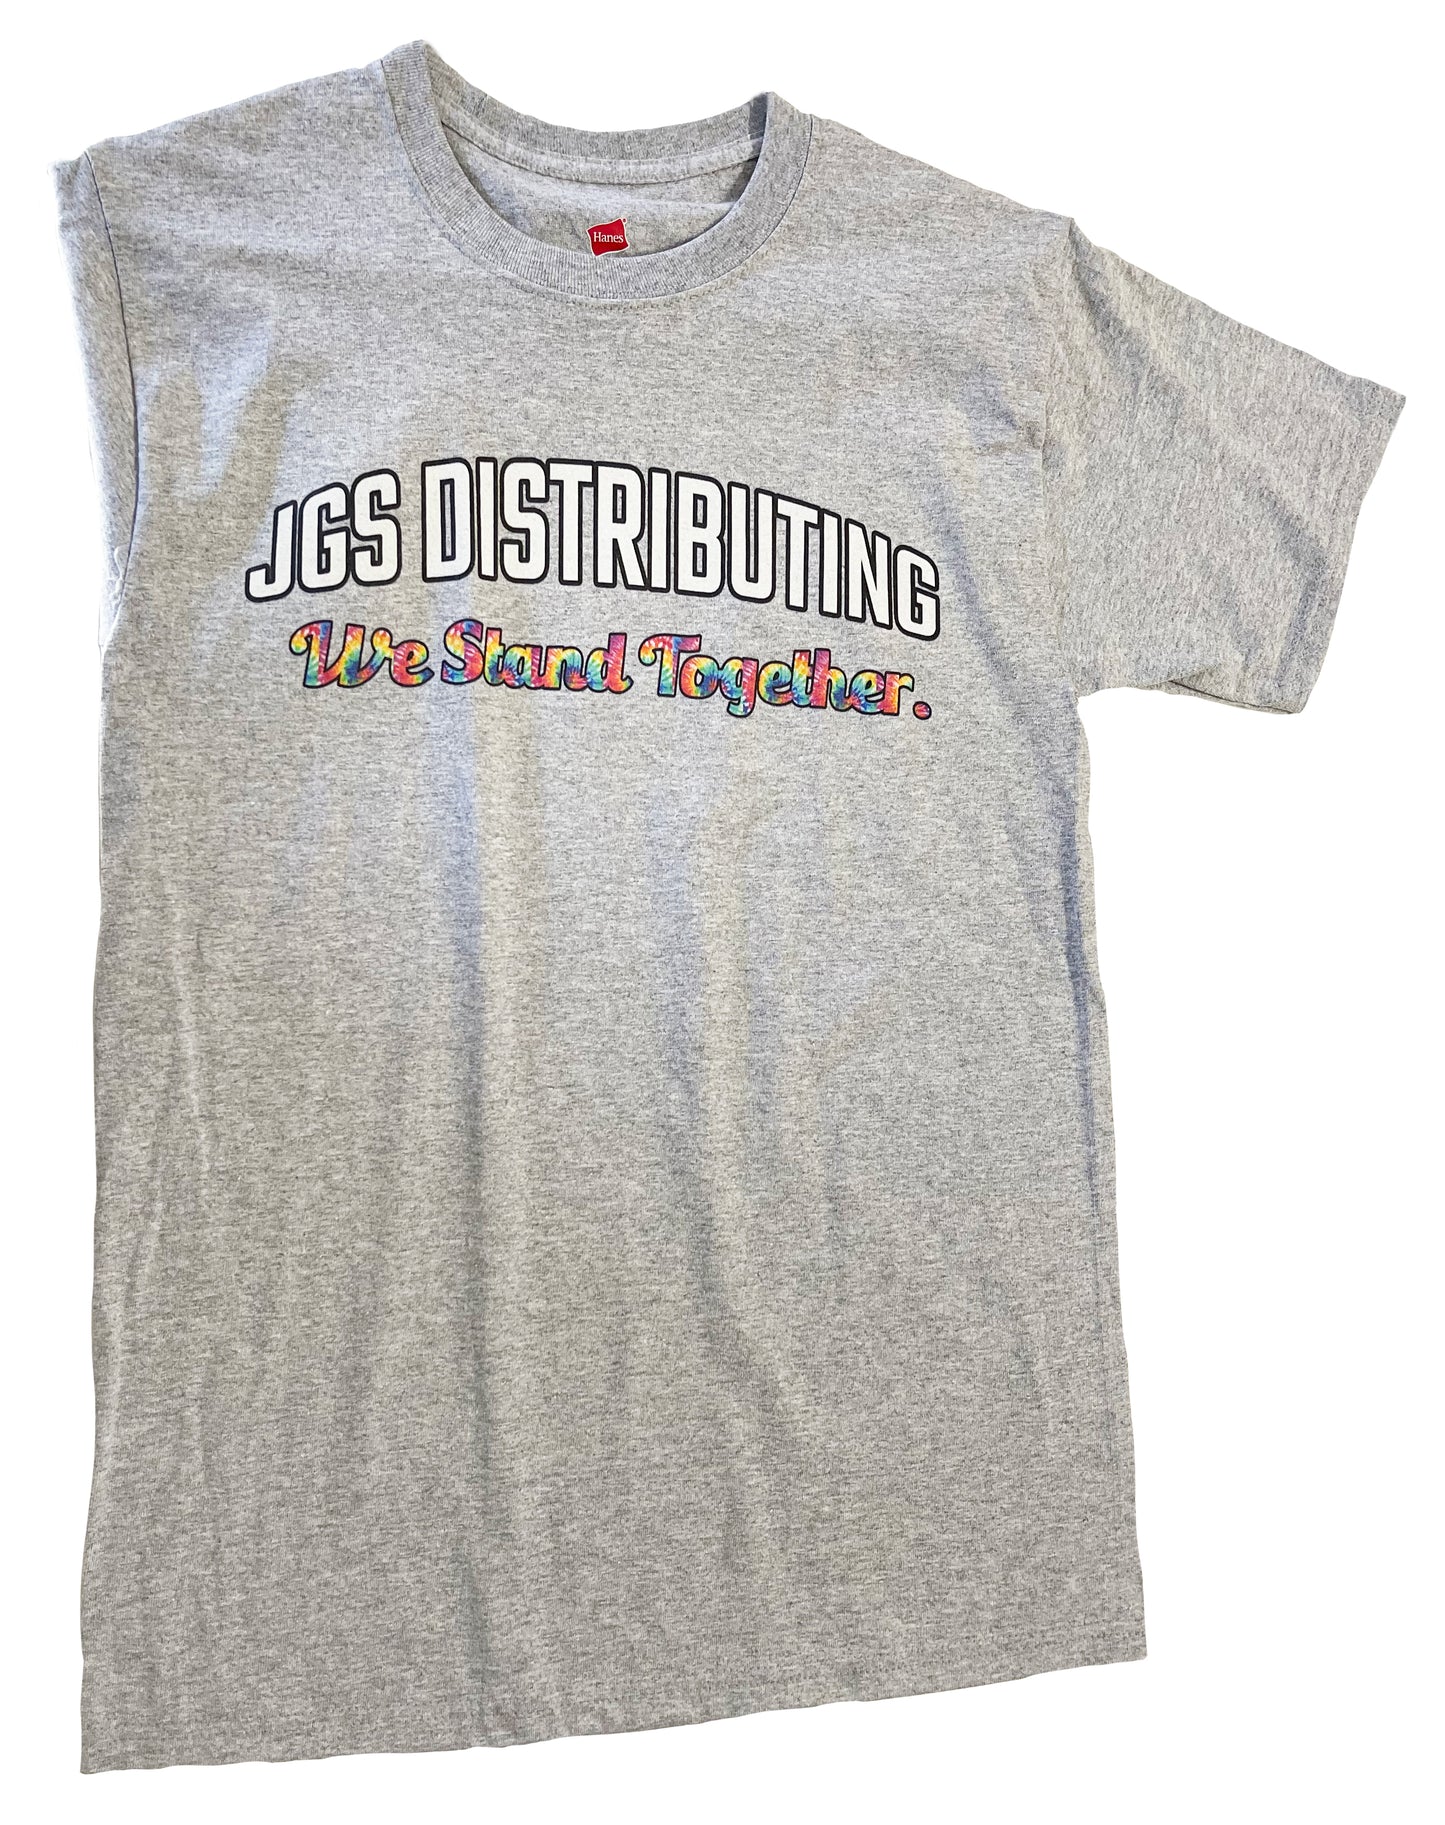 JGS Distributing Pride Shirt Tie-Dye Lettering